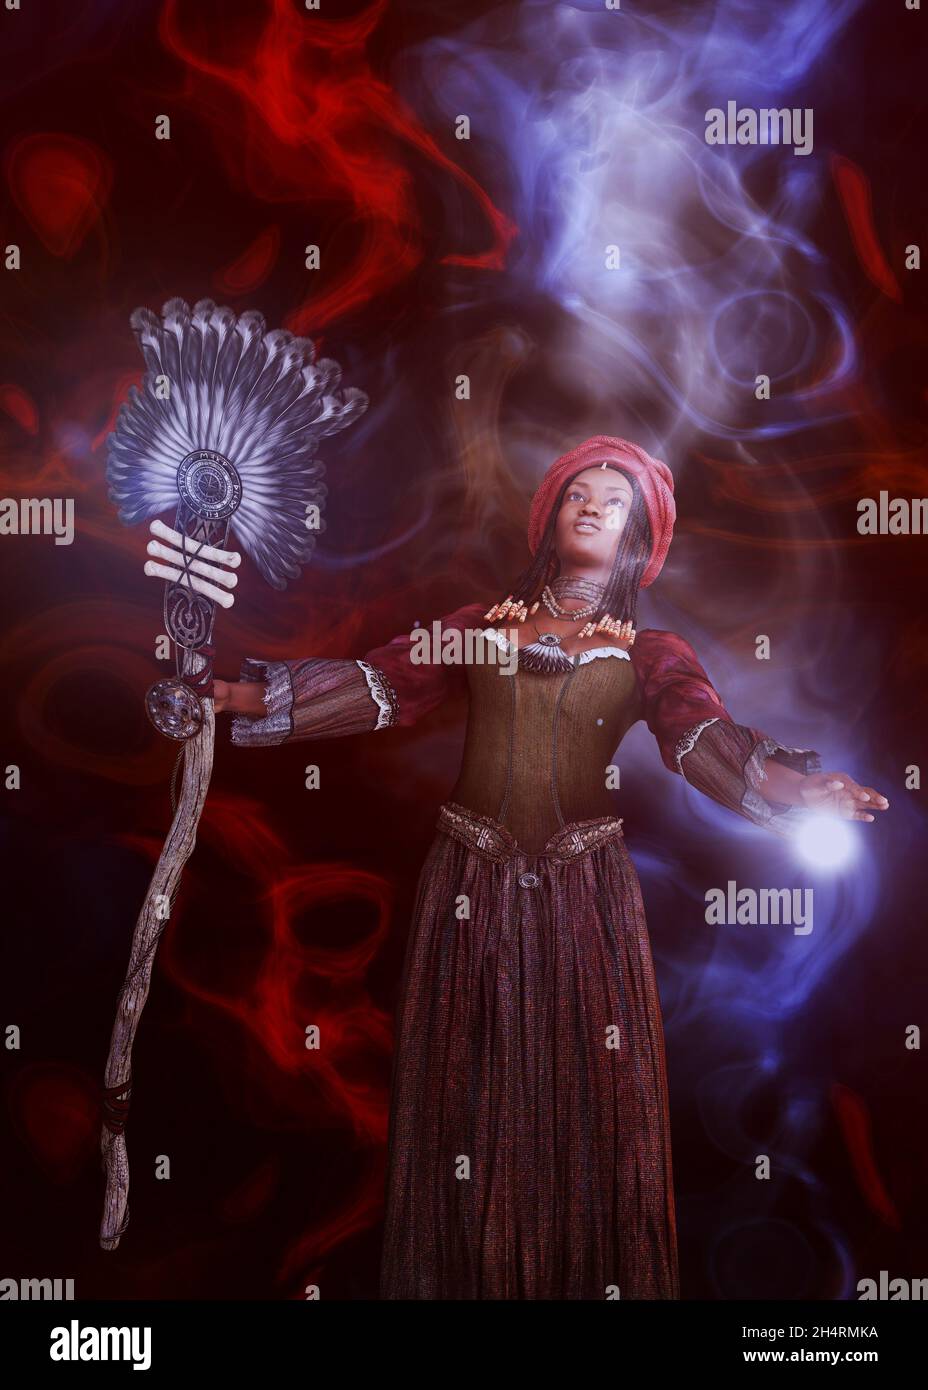 Voodoo Schamane, afrikanische Hexenfrau zaubern, 3D-Illustration  Stockfotografie - Alamy